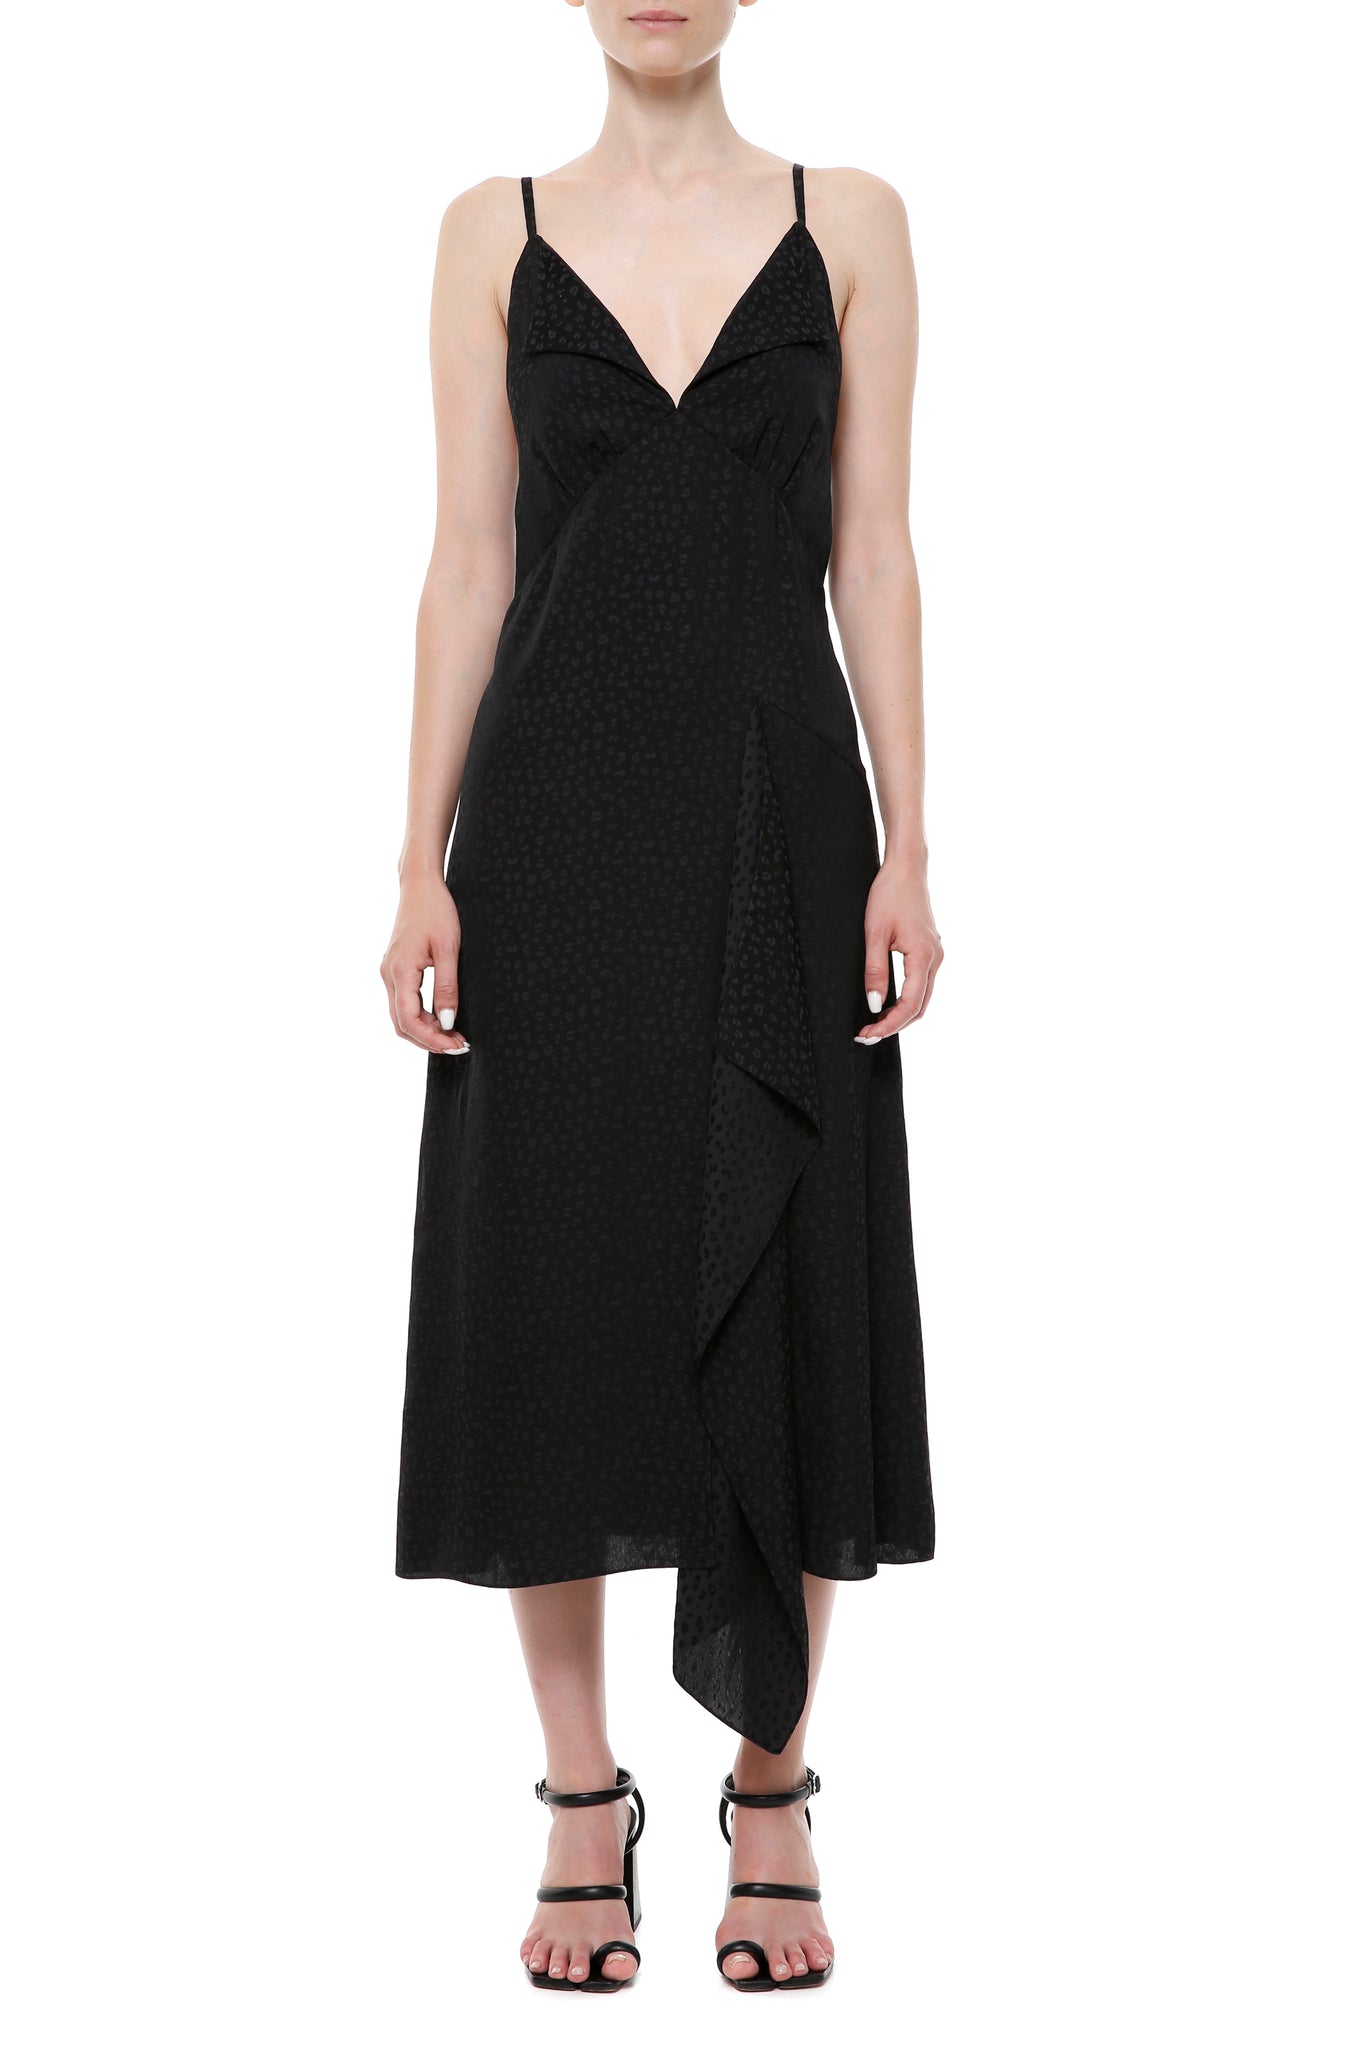 Black jacquard slip-dress with an asymmetrical flounce